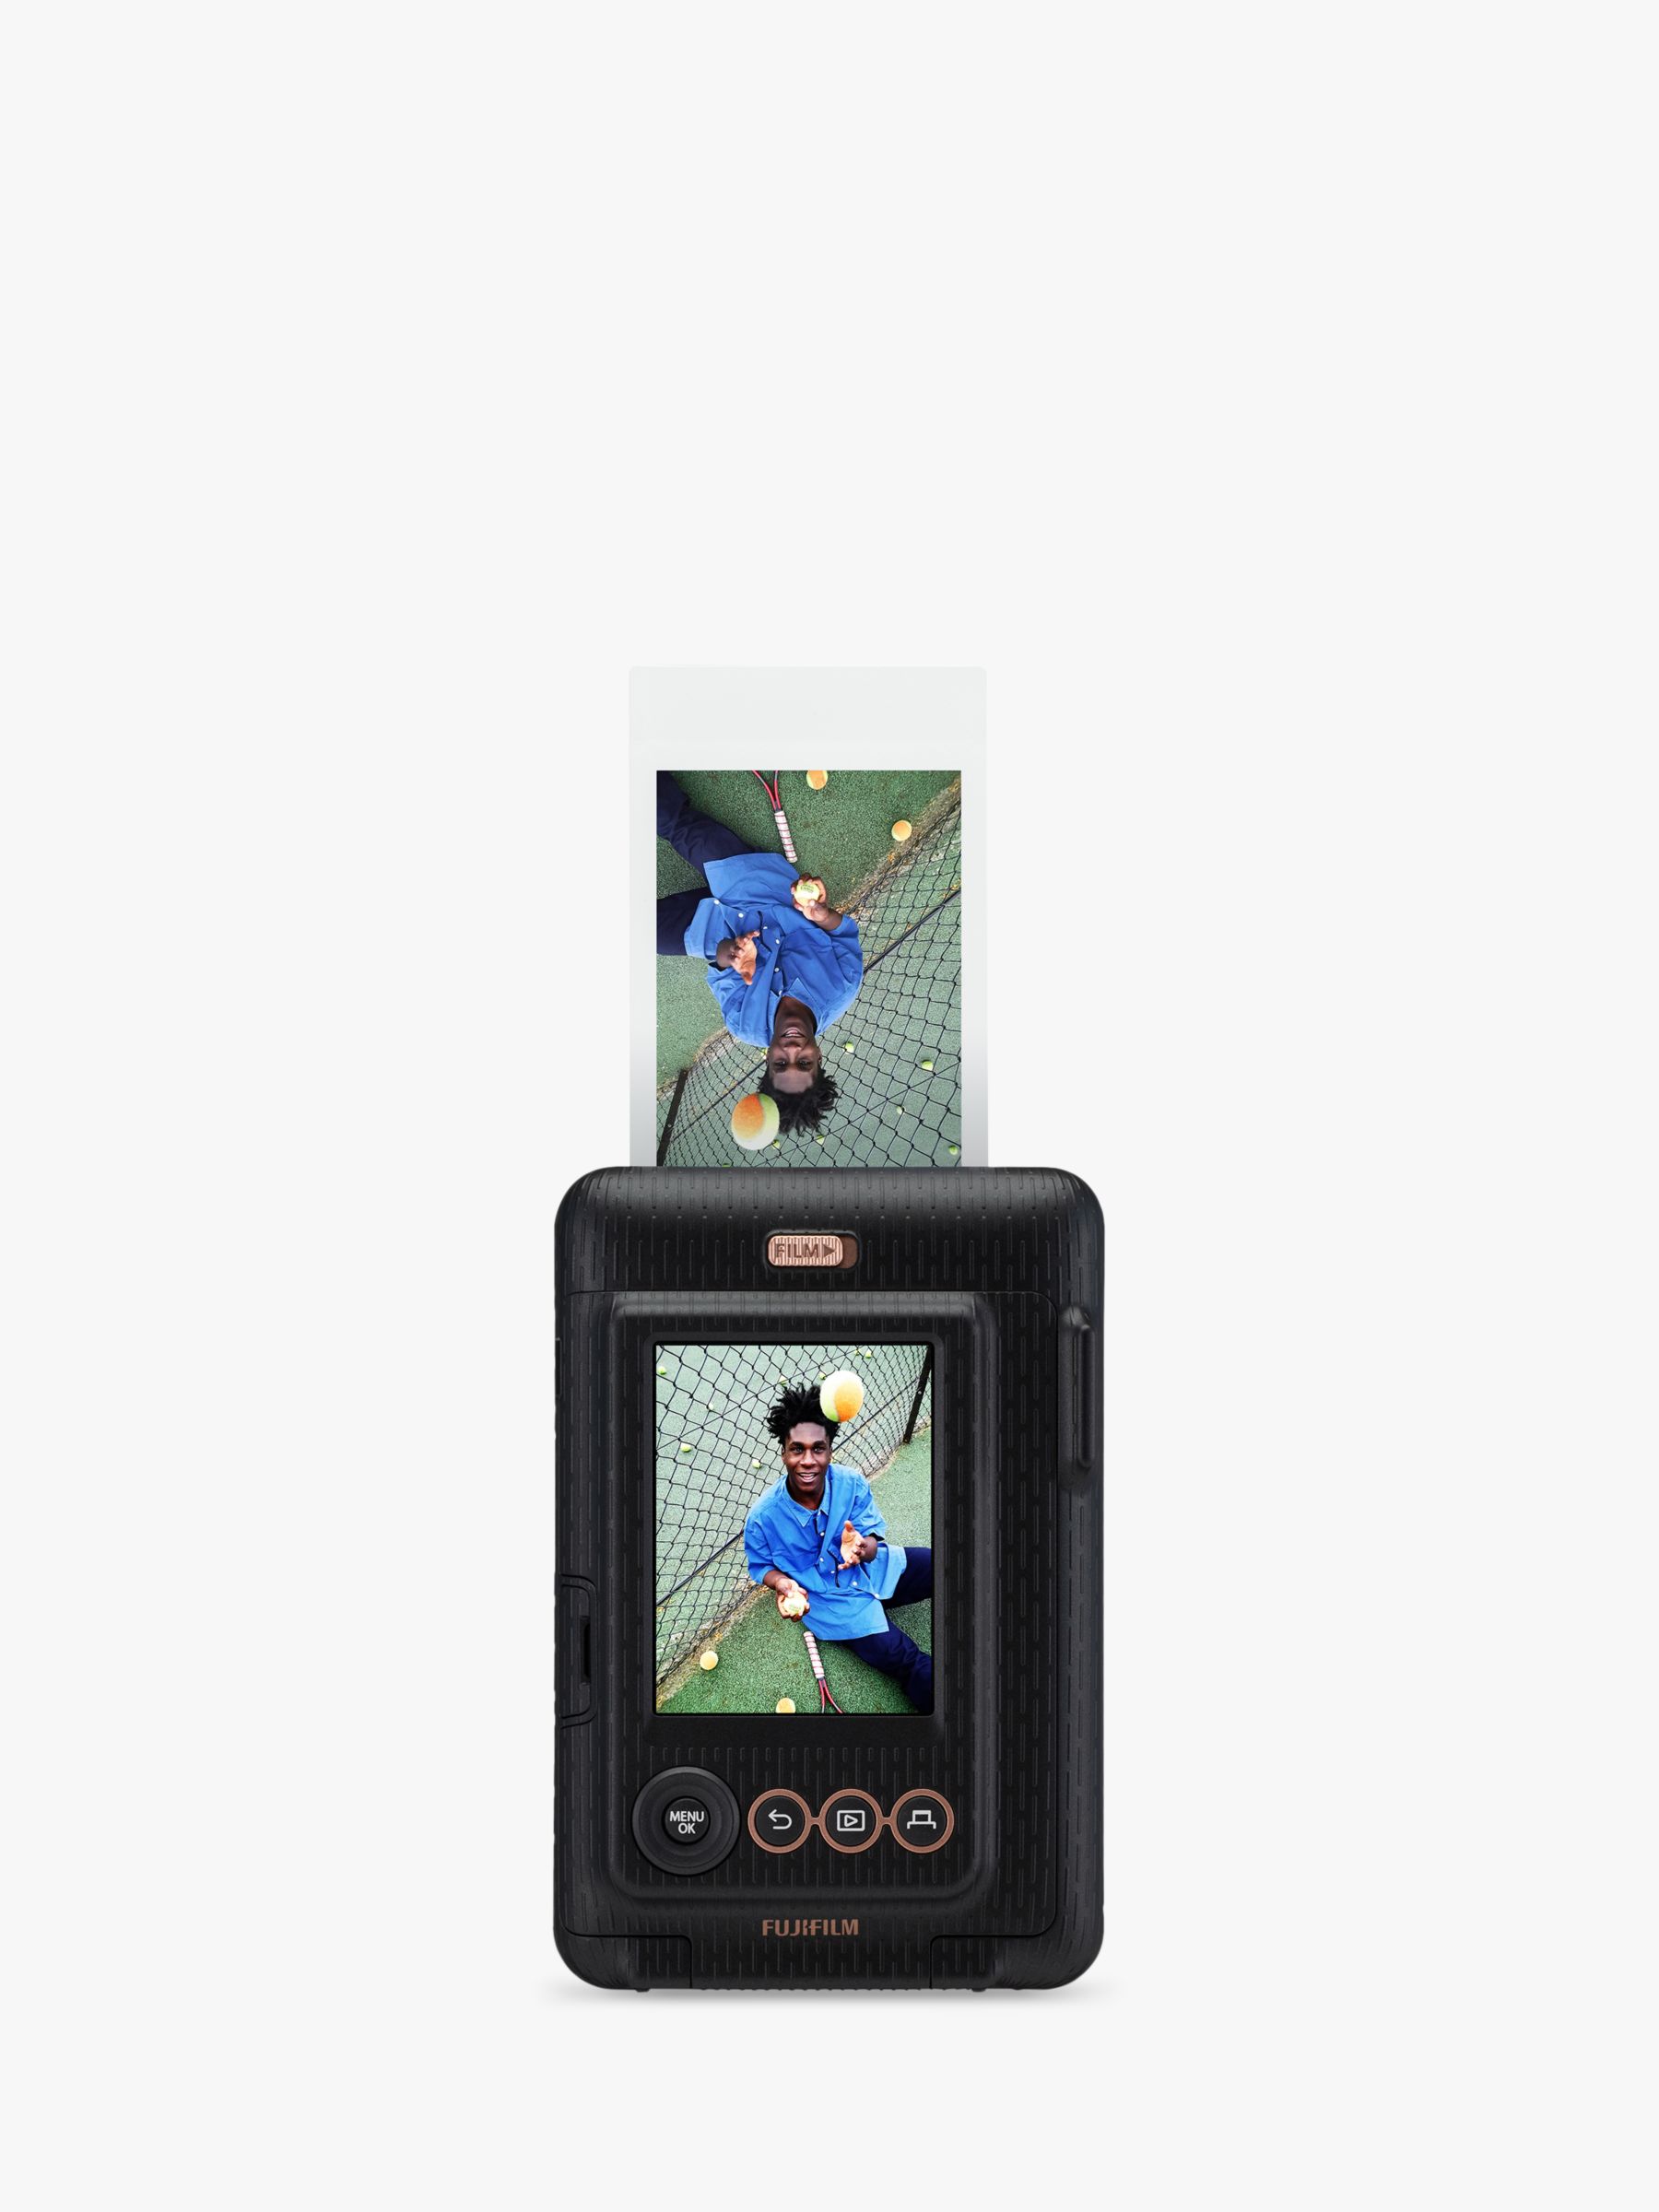 Fujifilm Instax Mini LiPlay Hybrid Instant Camera with 2.7 LCD